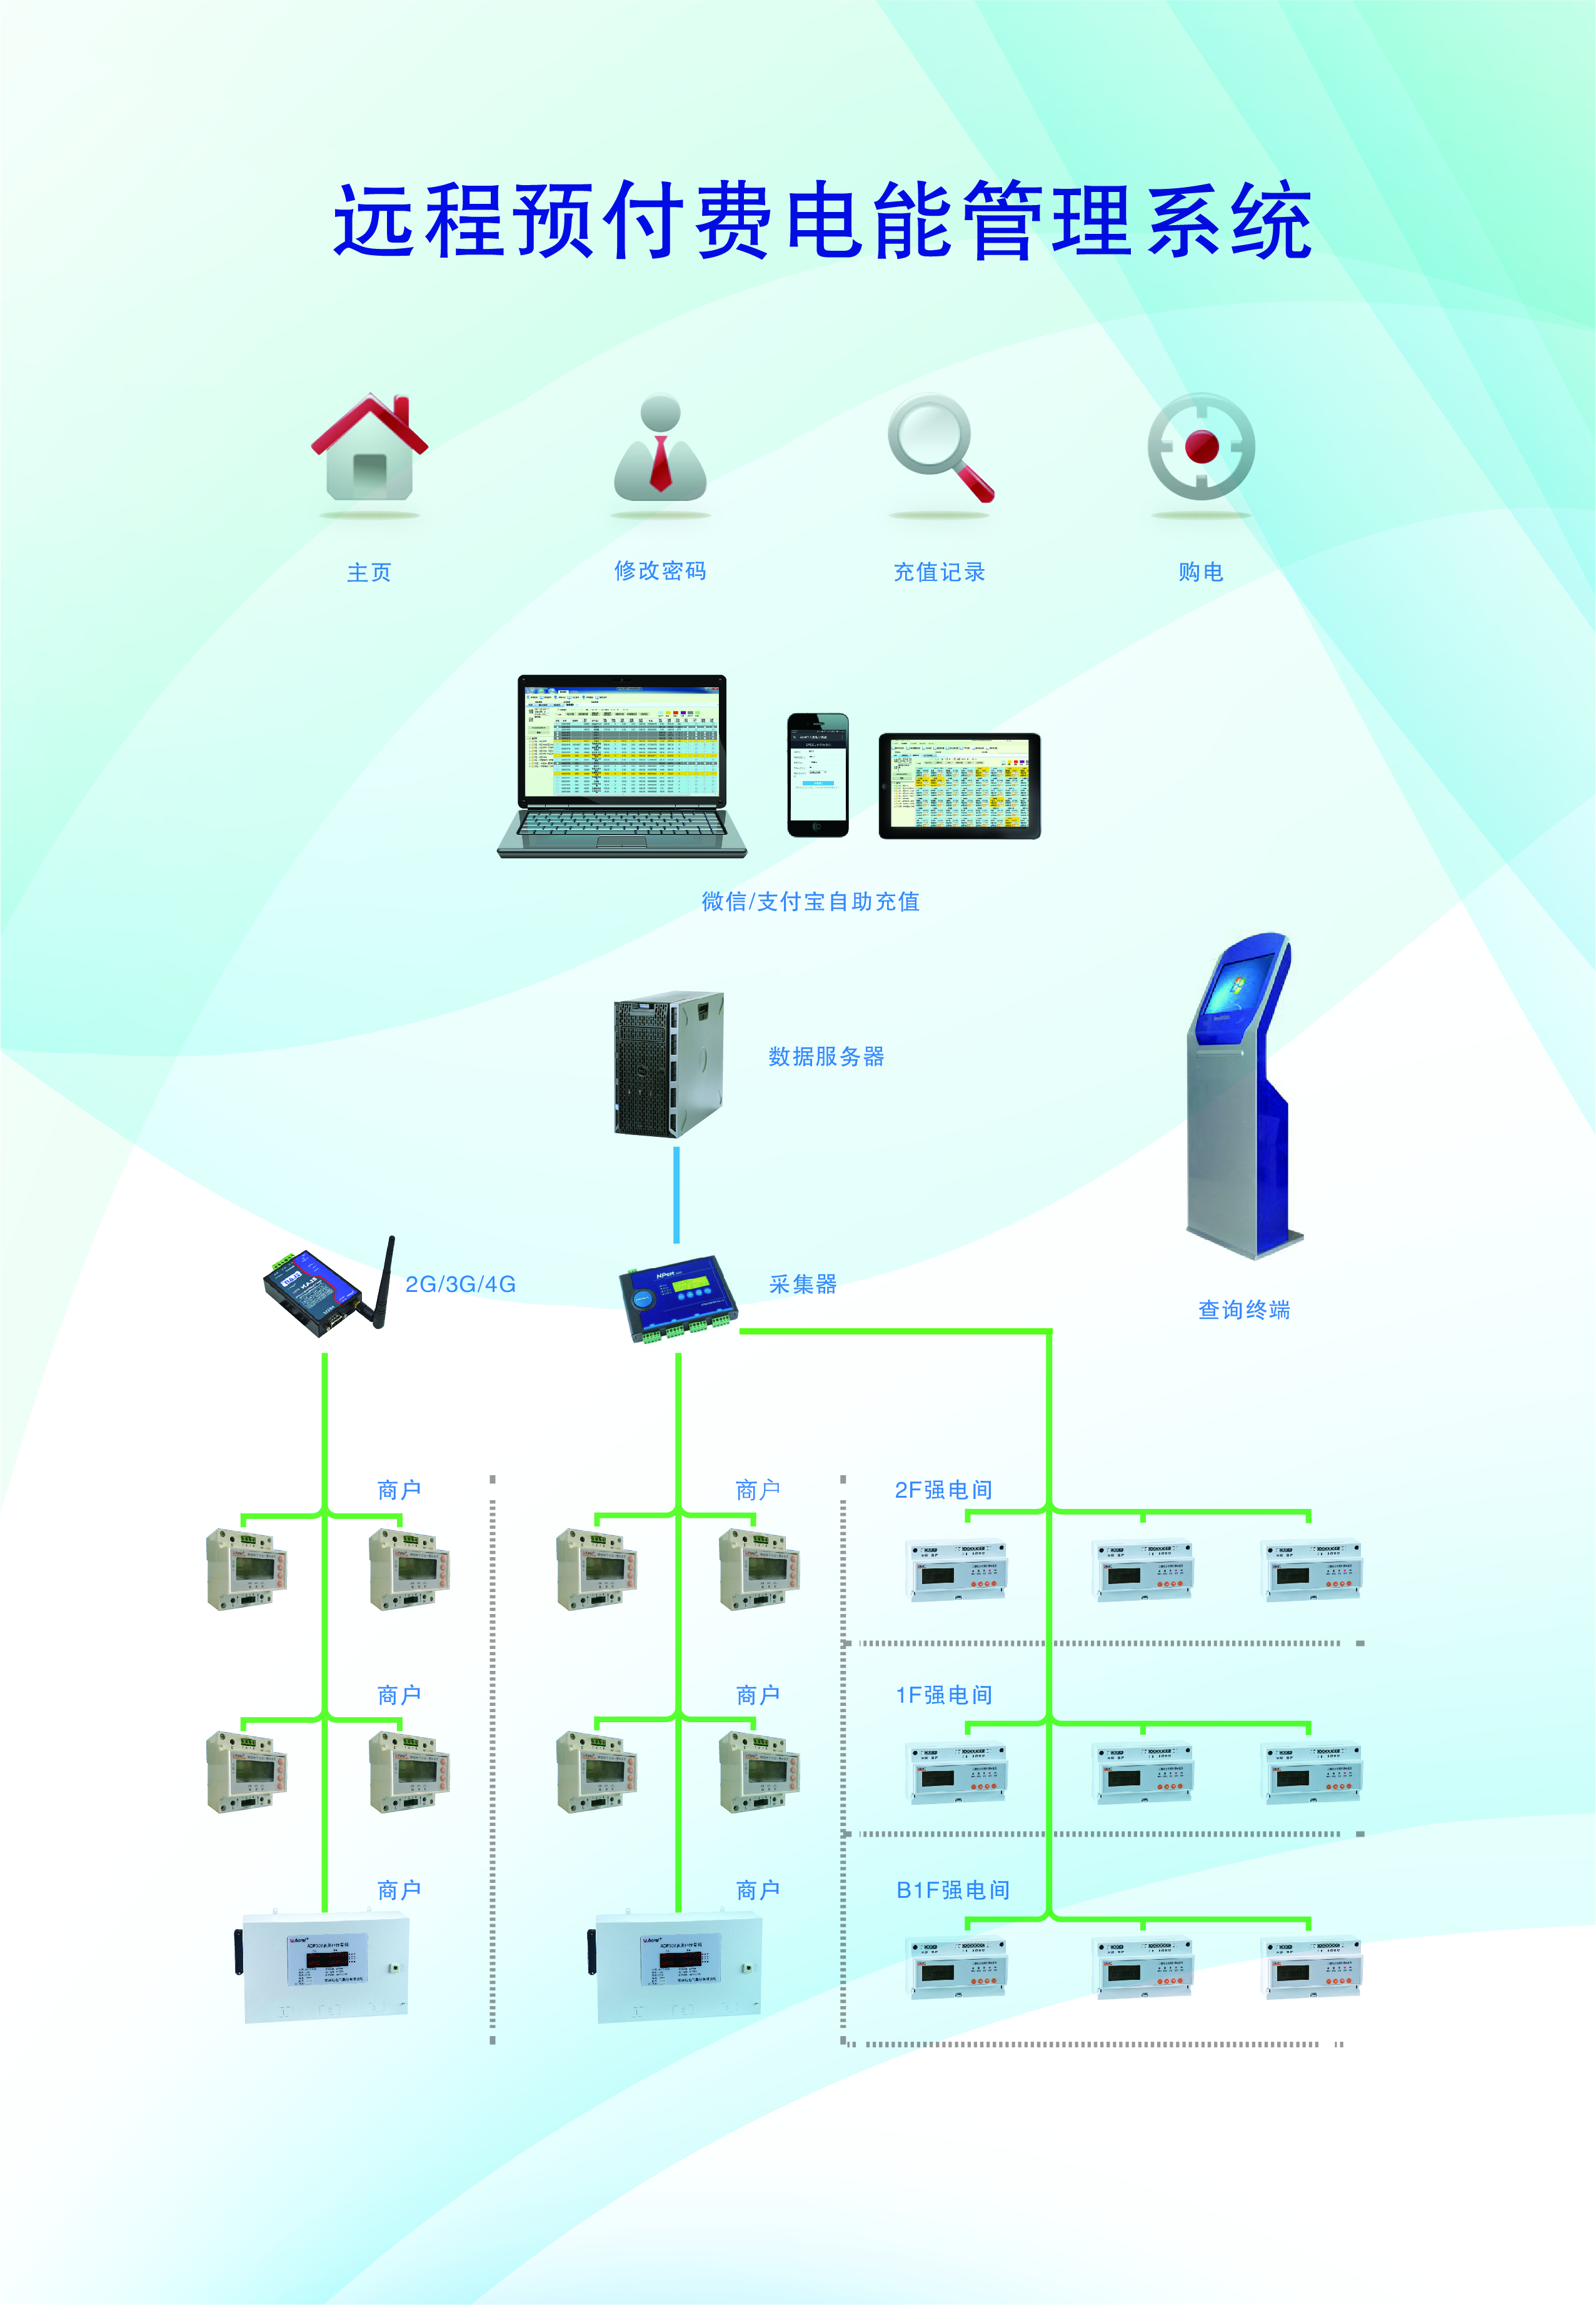 Acrel-3200远程预付费电能管理系统在南通龙信广场的应用